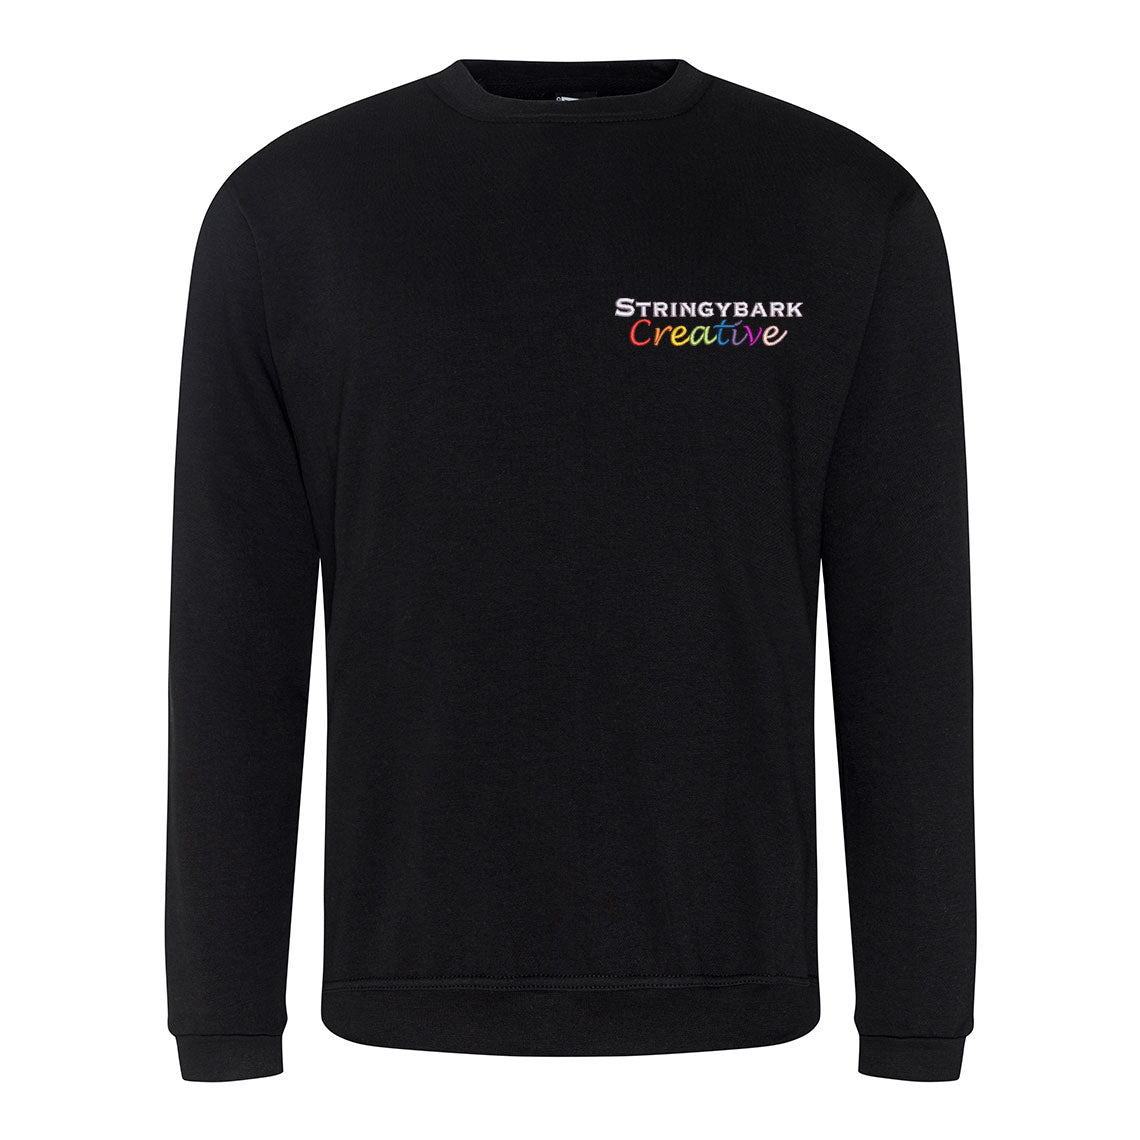 Stringybark Creative Black Sweatshirt